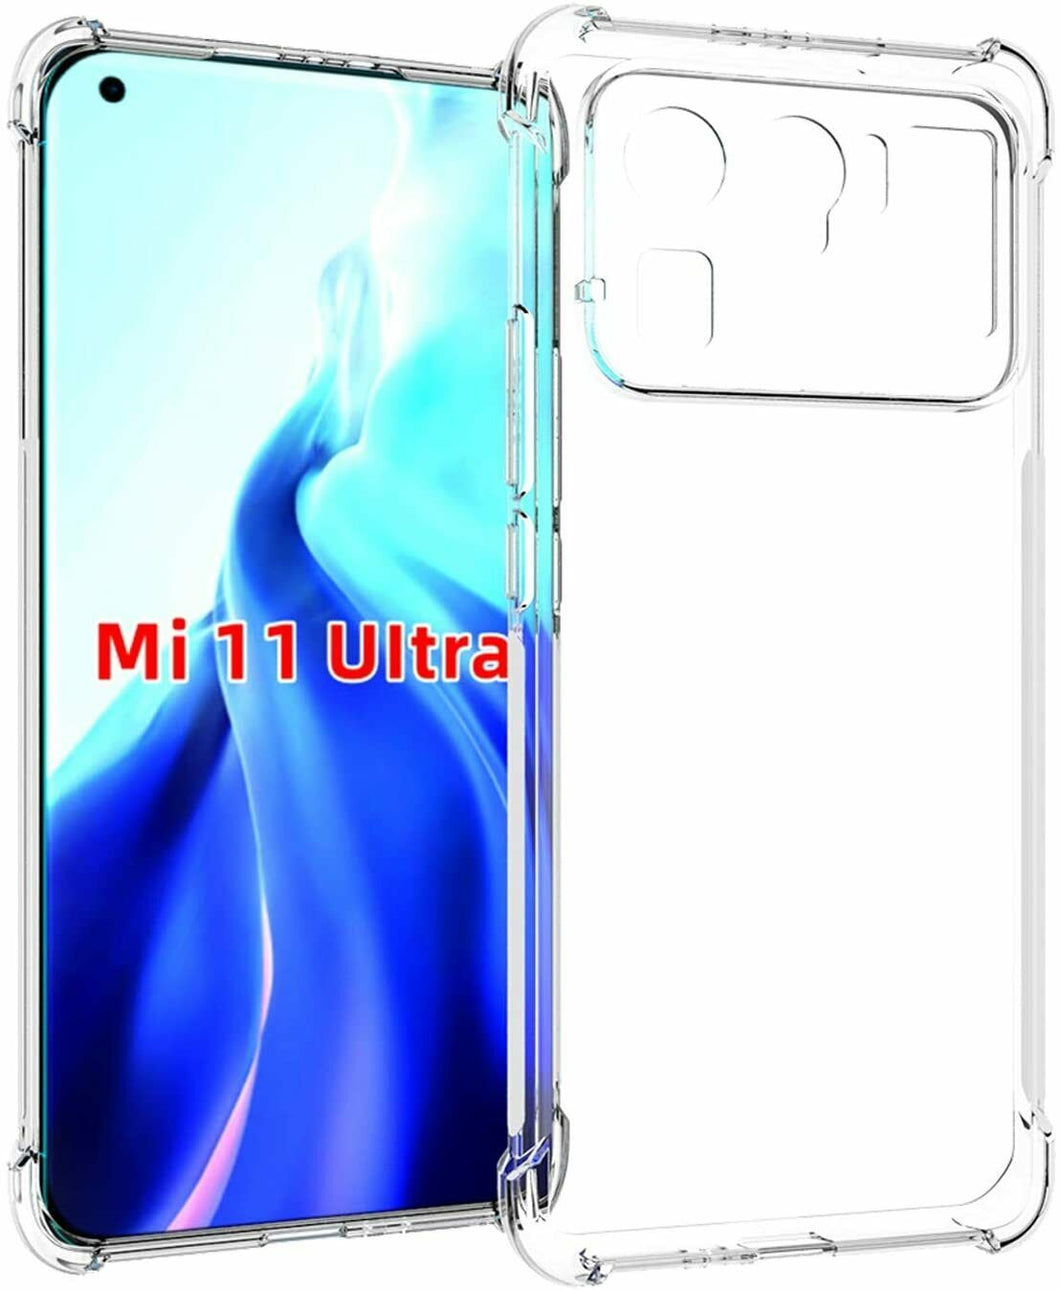 Xiaomi Mi 11 Ultra Case Clear Silicone Slim Shockproof Gel Cover